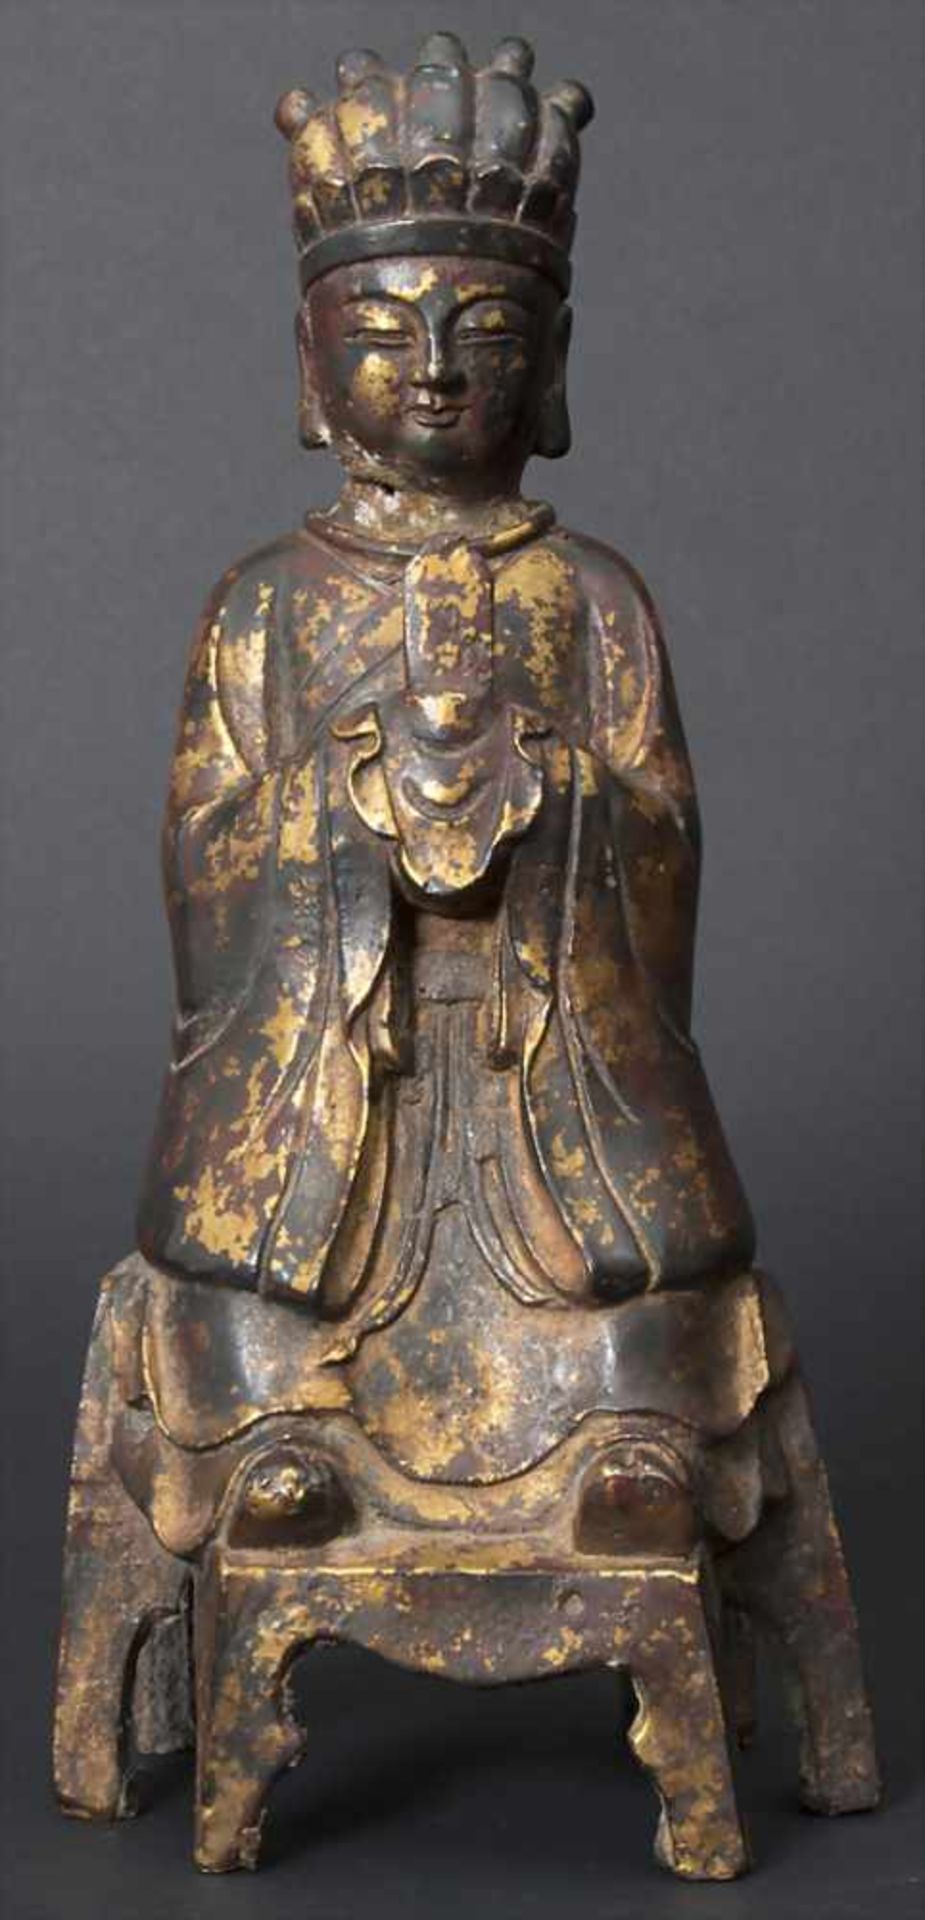 Buddha, China, wohl 19./20. JhMaterial: kupferfarbene Bronze, dunkel patiniert, Reste von Rotlack